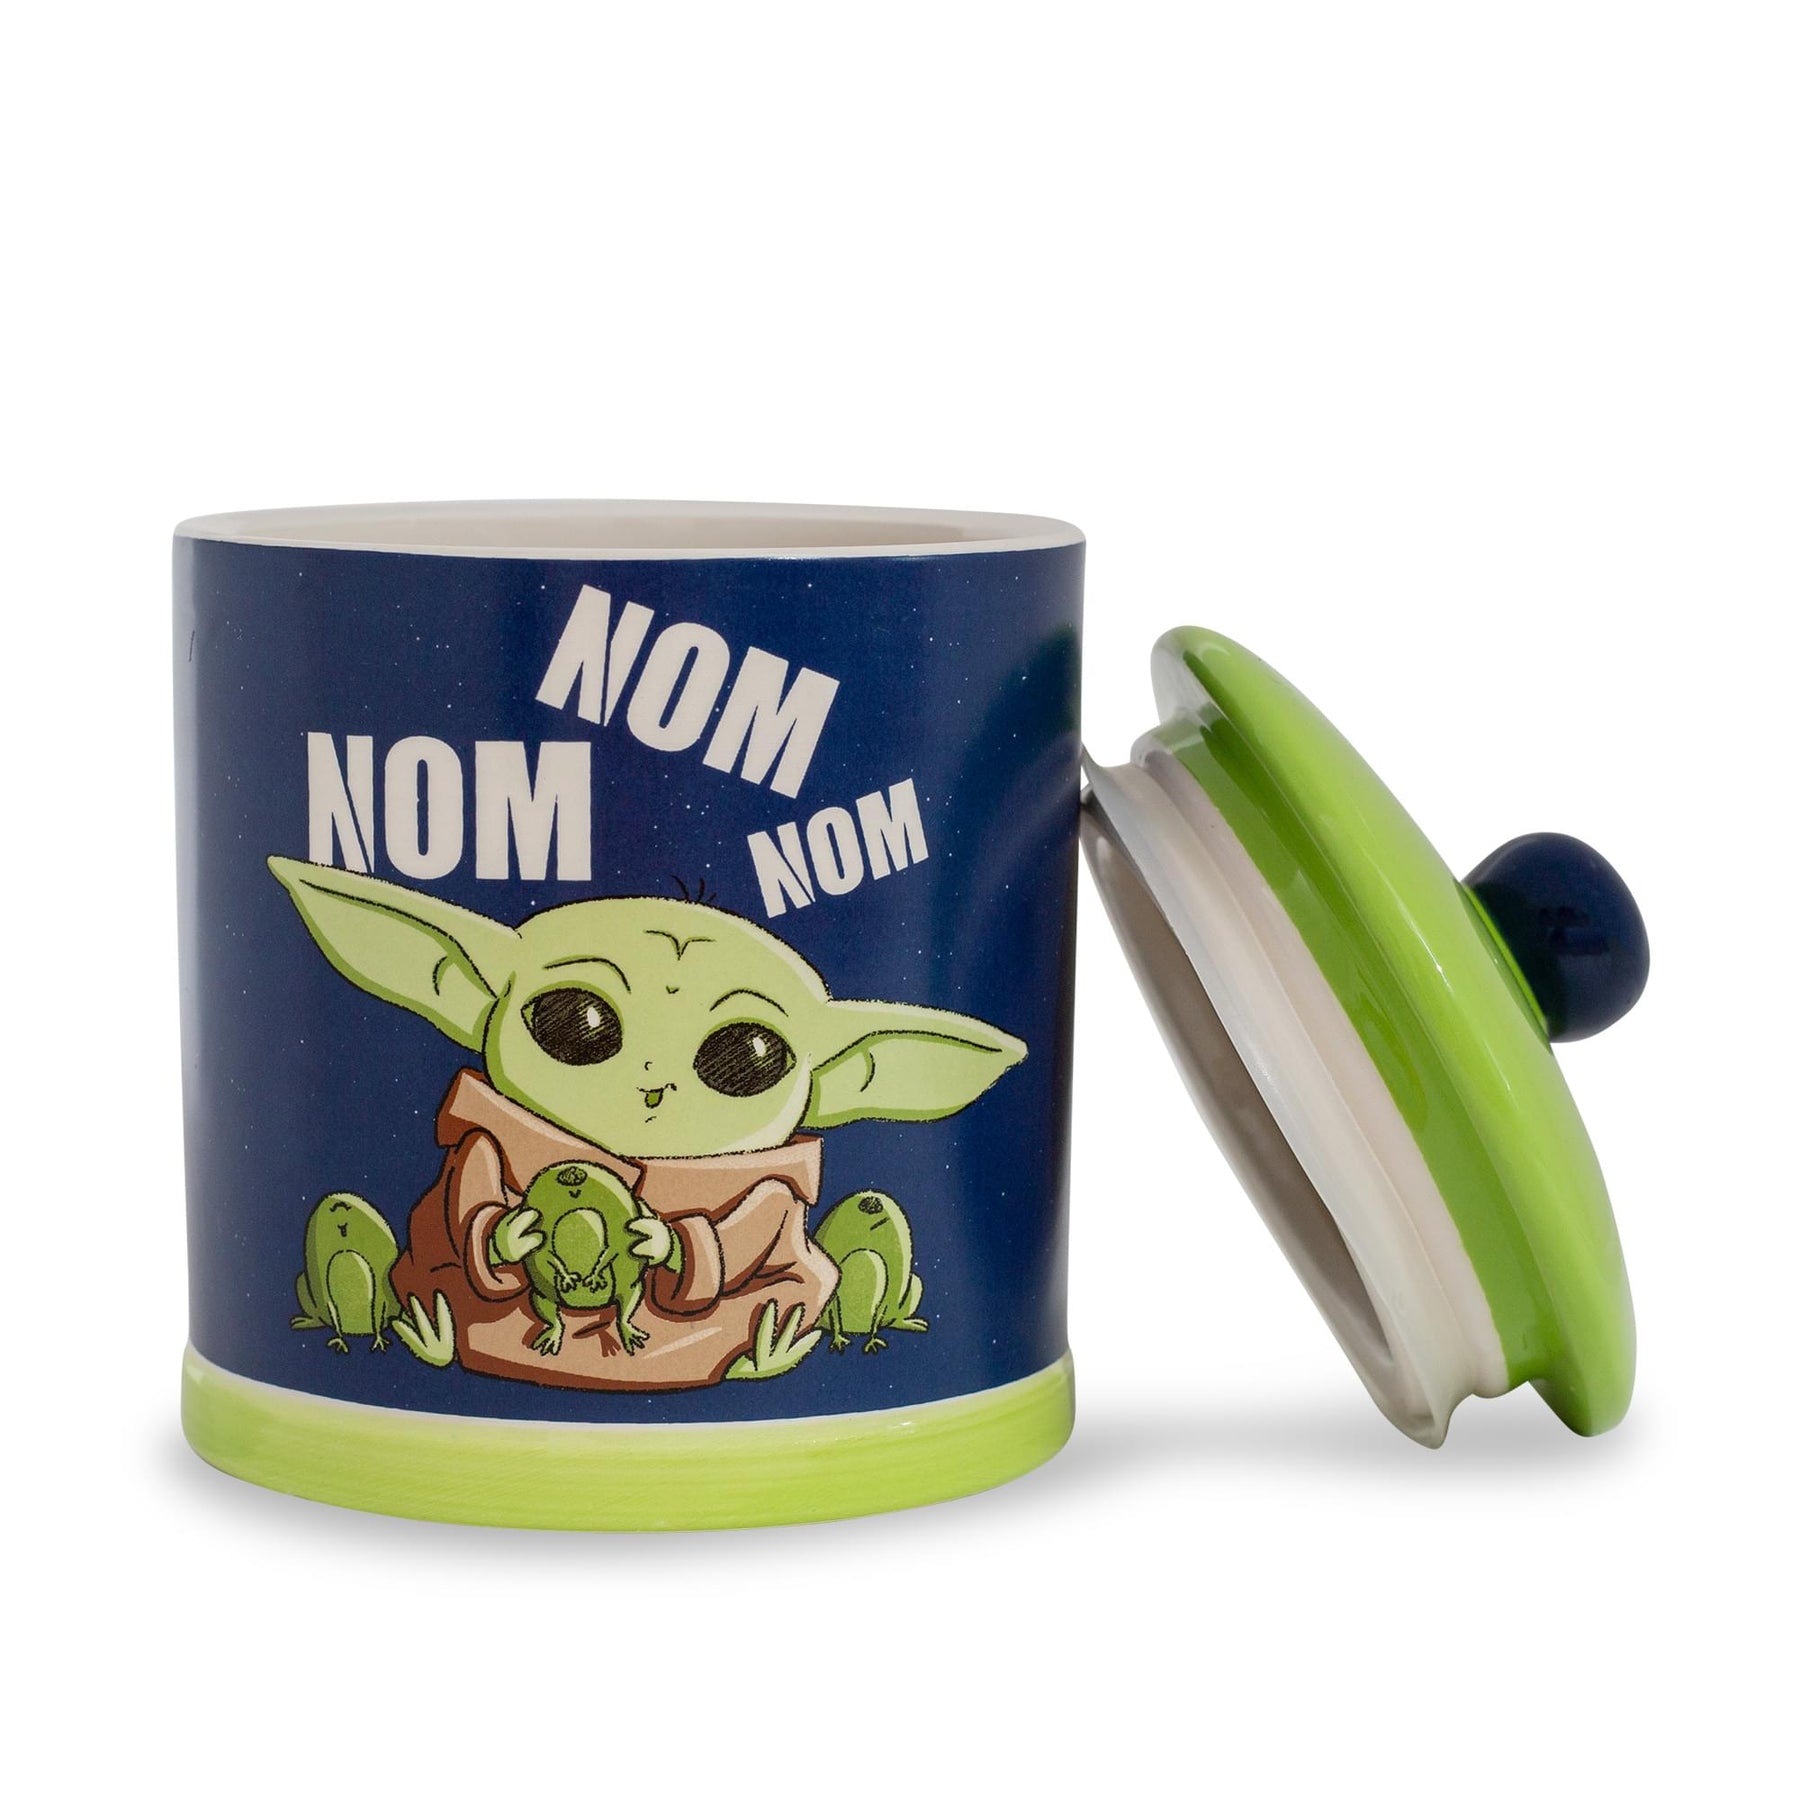 Star Wars: The Mandalorian Grogu "Nom Nom Nom" Frogs Large Ceramic Cookie Jar